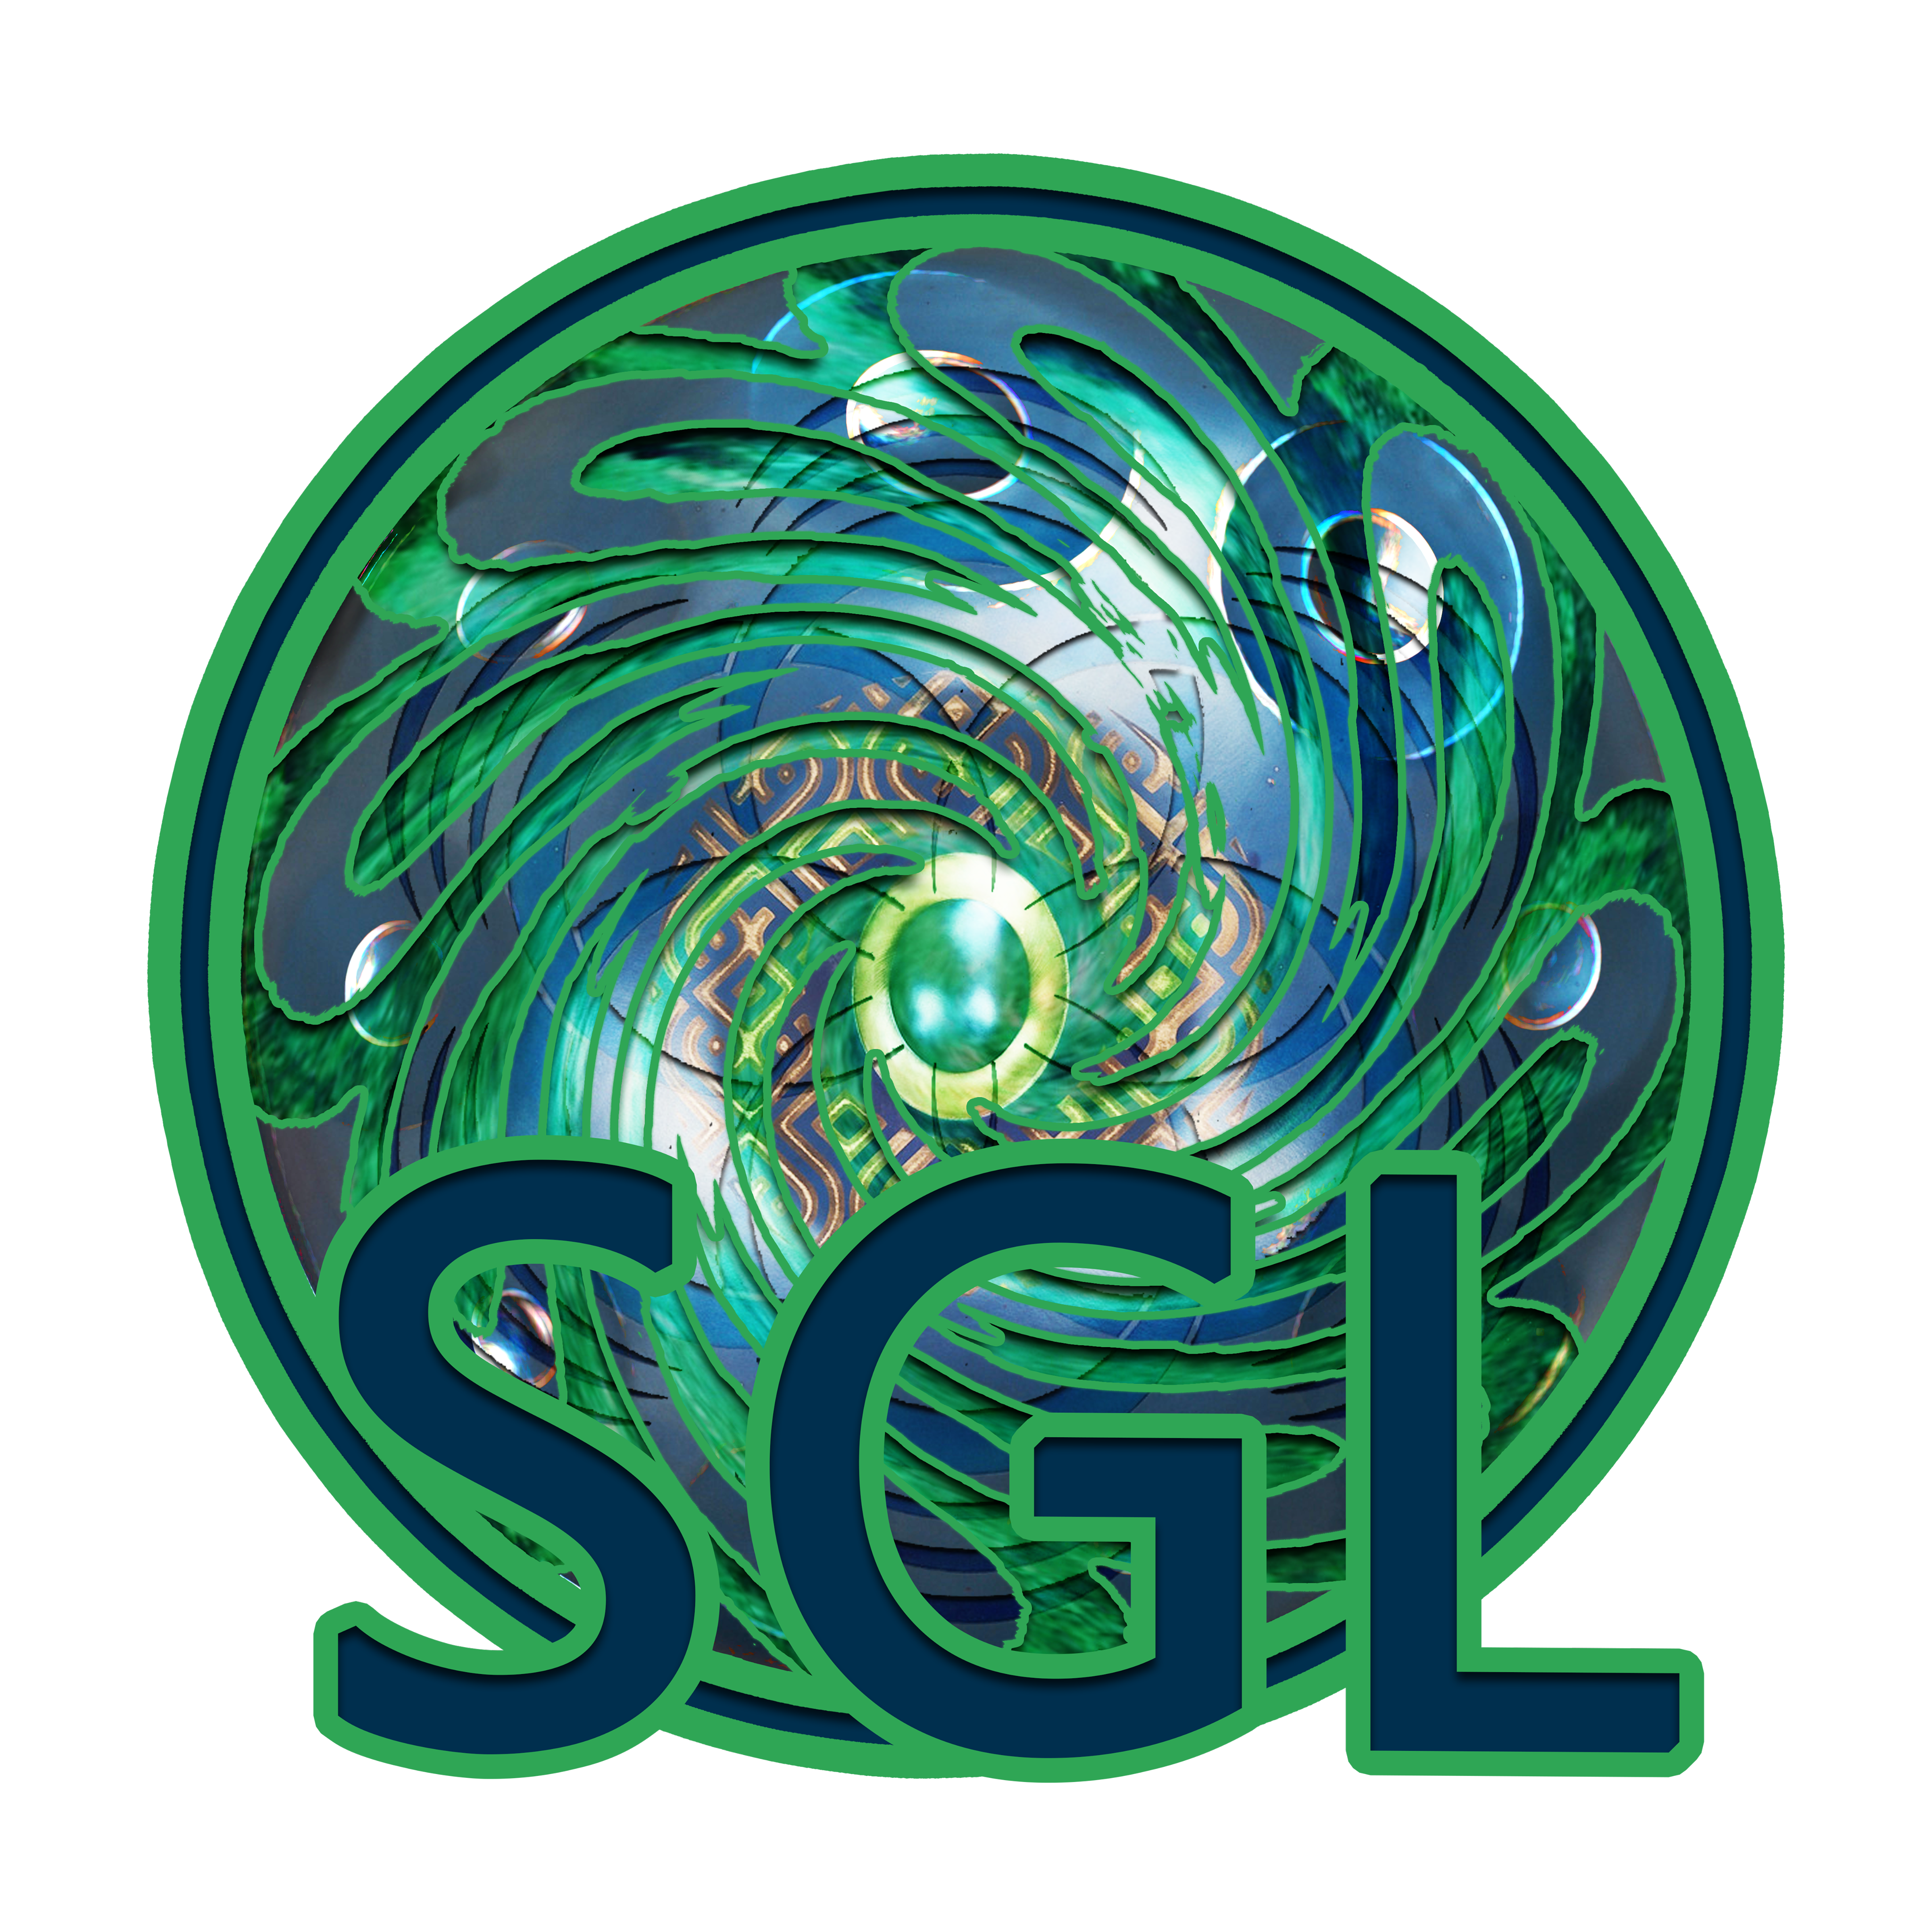 SGL-Logo